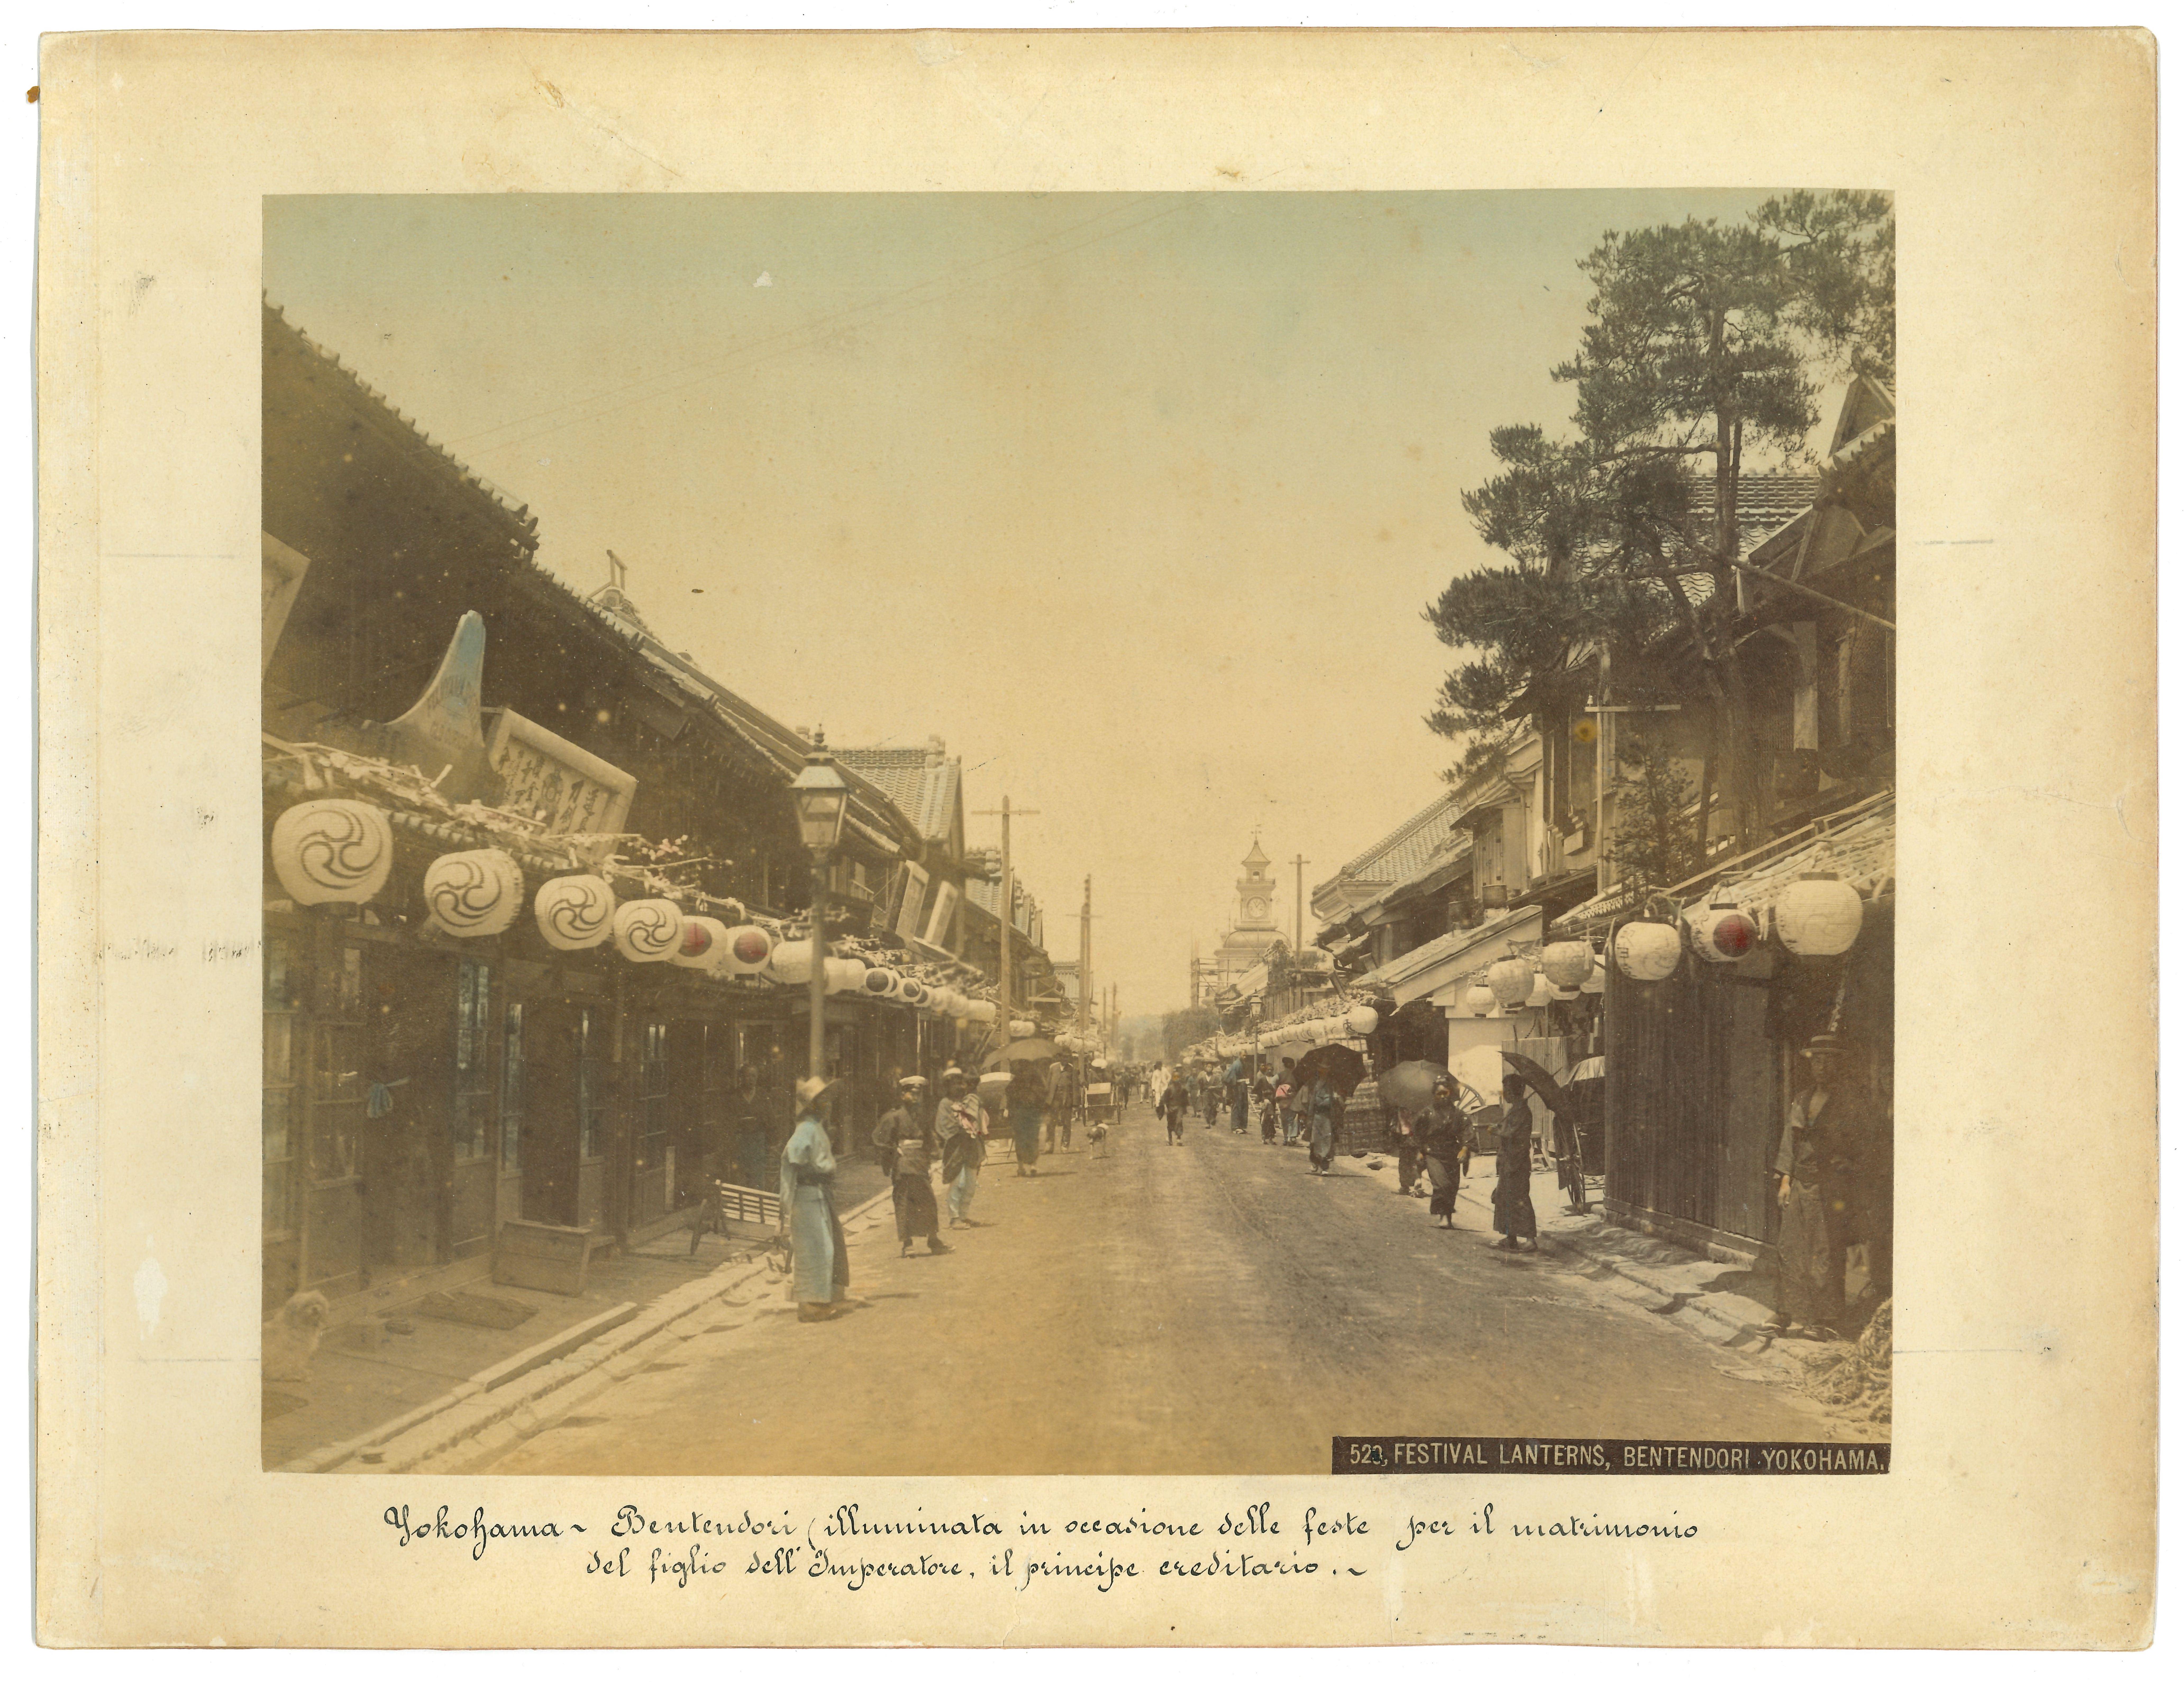 Ancient Views of Yokohama - Vintage Albumen Prints - 1890s